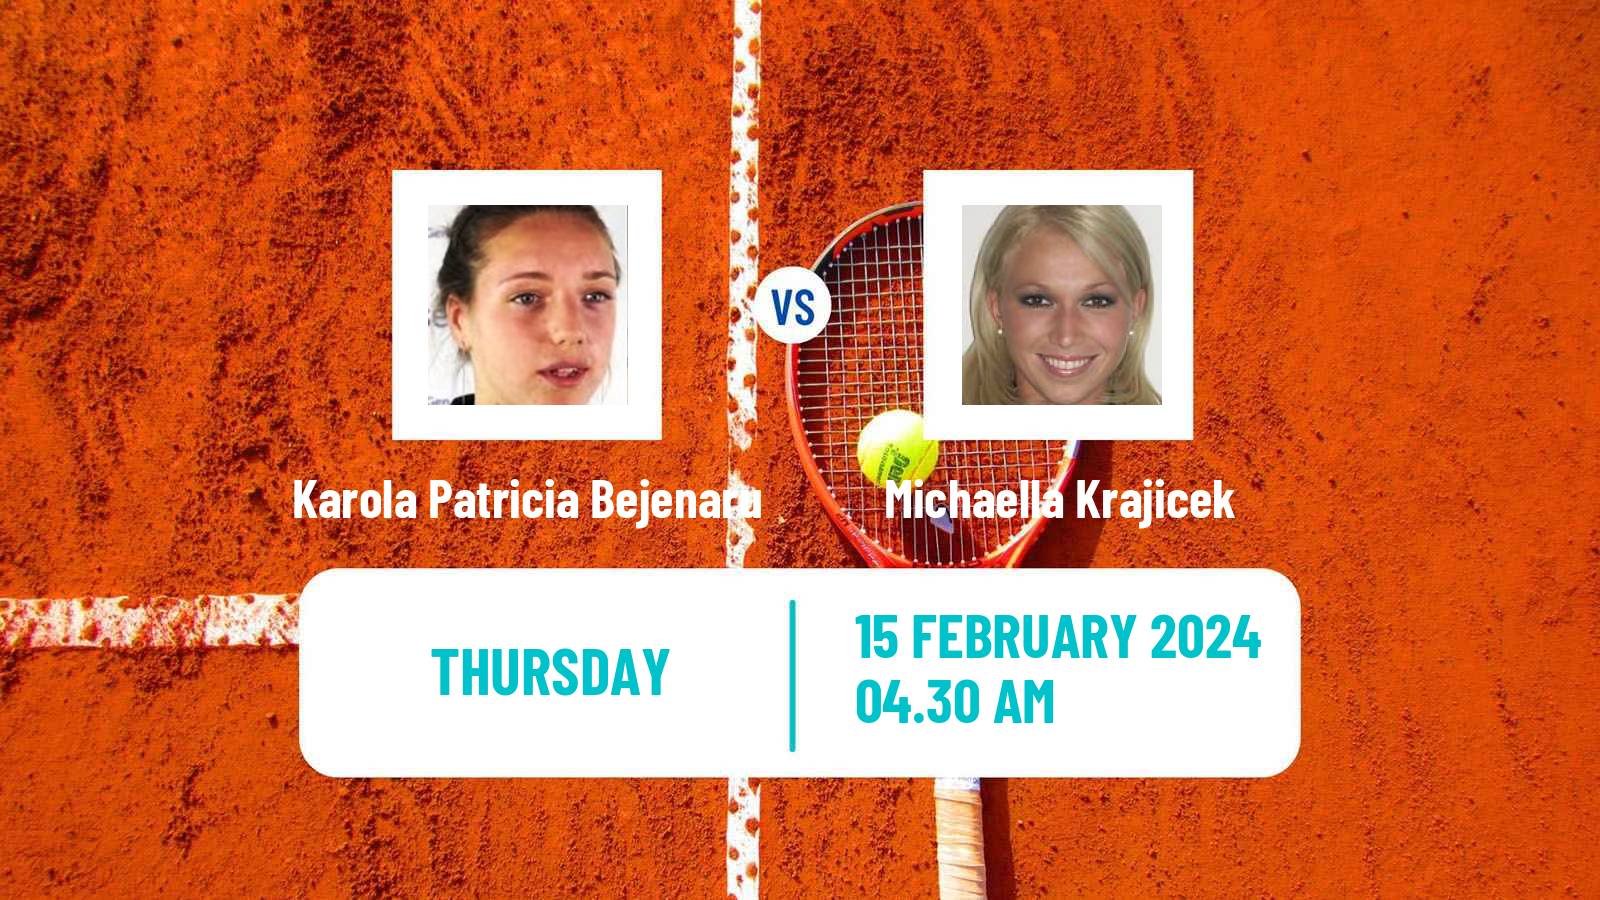 Tennis ITF W15 Sharm Elsheikh 2 Women Karola Patricia Bejenaru - Michaella Krajicek